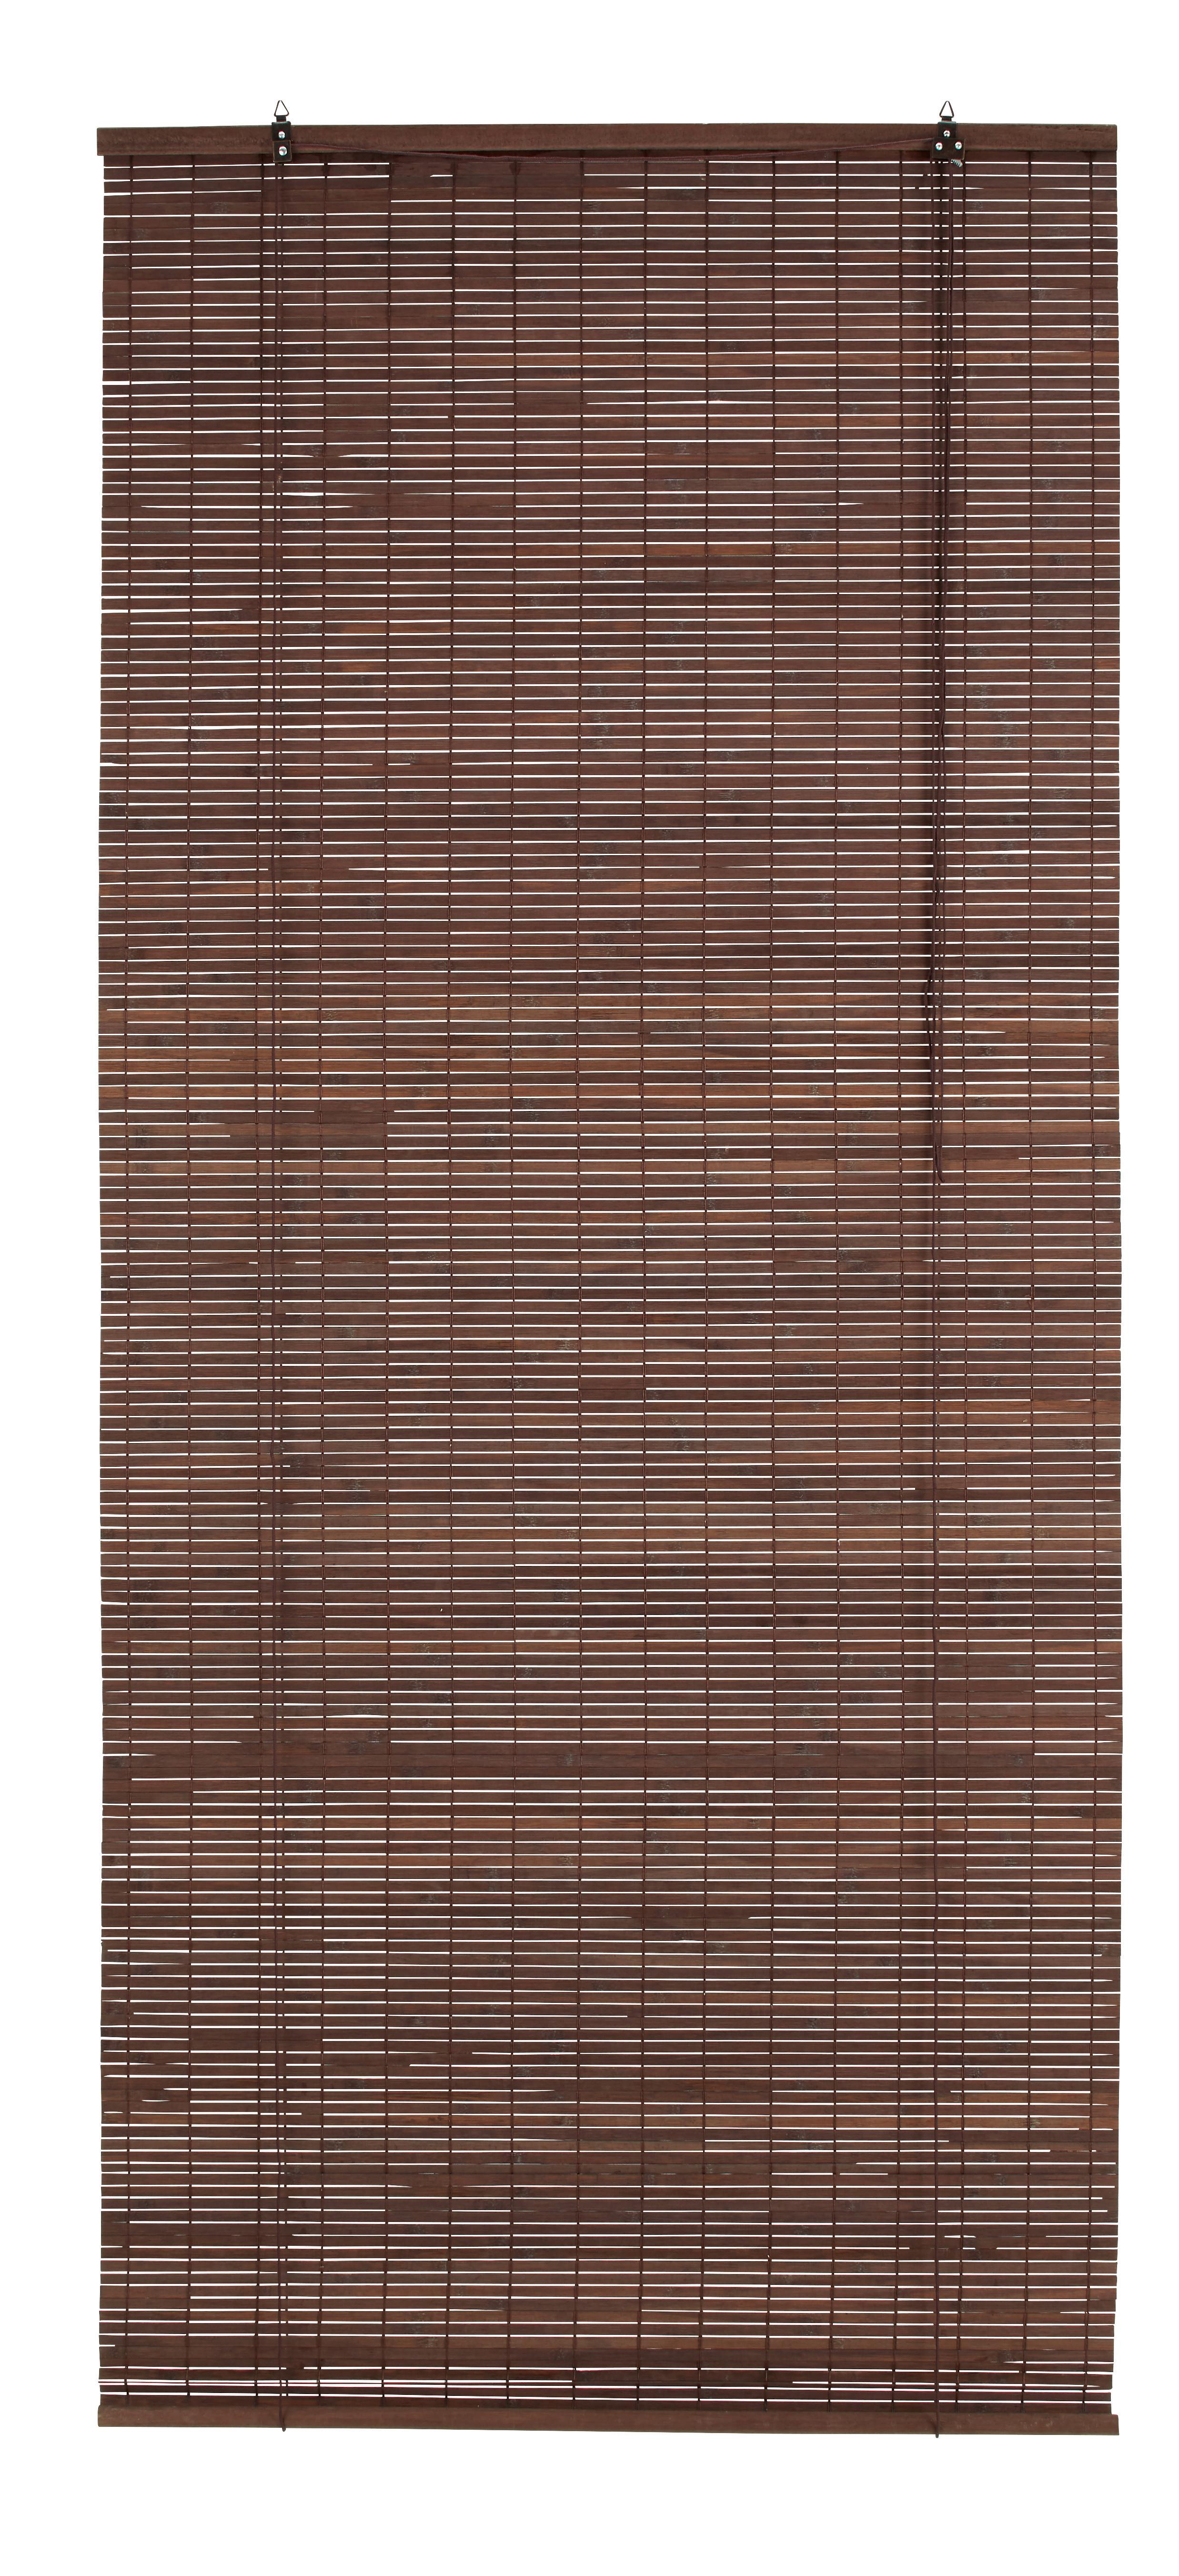 Rolo Zavjesa 80/180 Cm Woody - tamno smeđa, drvo (80/180cm) - Modern Living